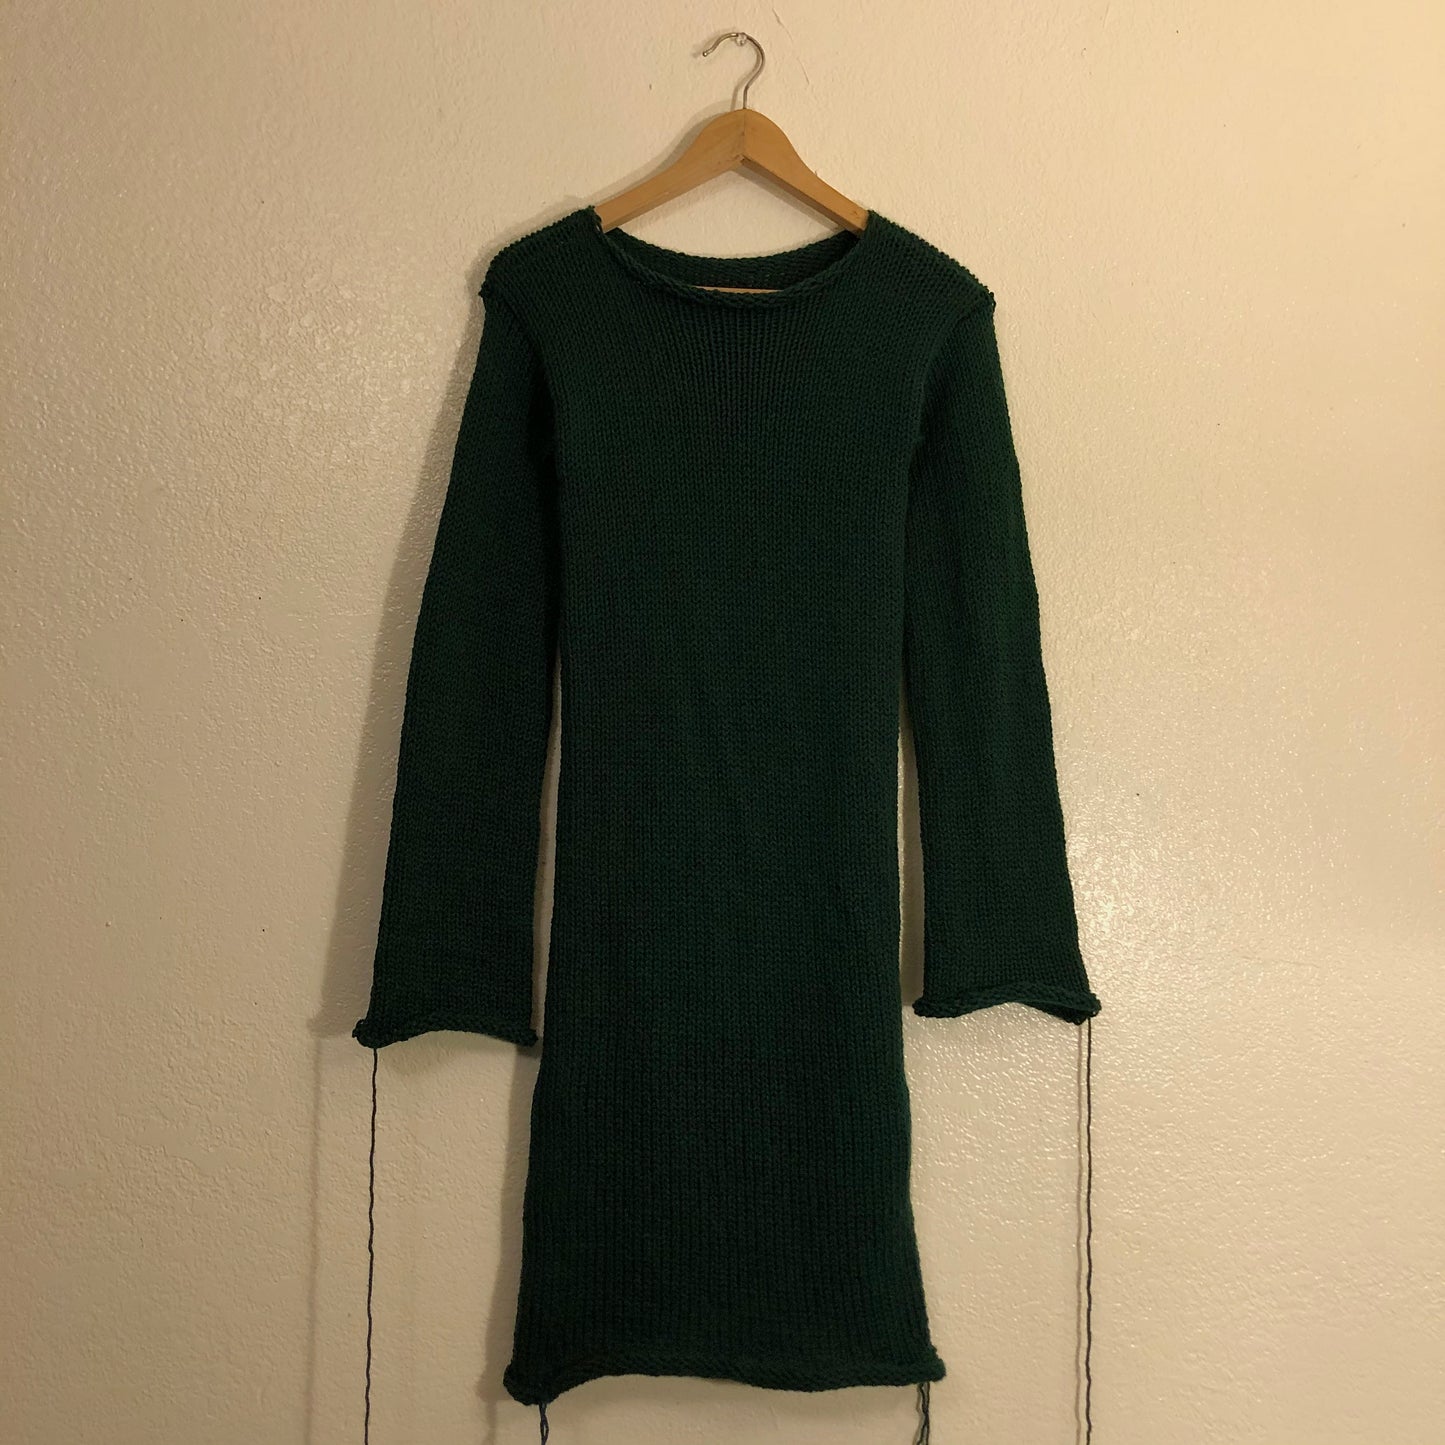 Long sleeve knitted dress in a dark emerald green 